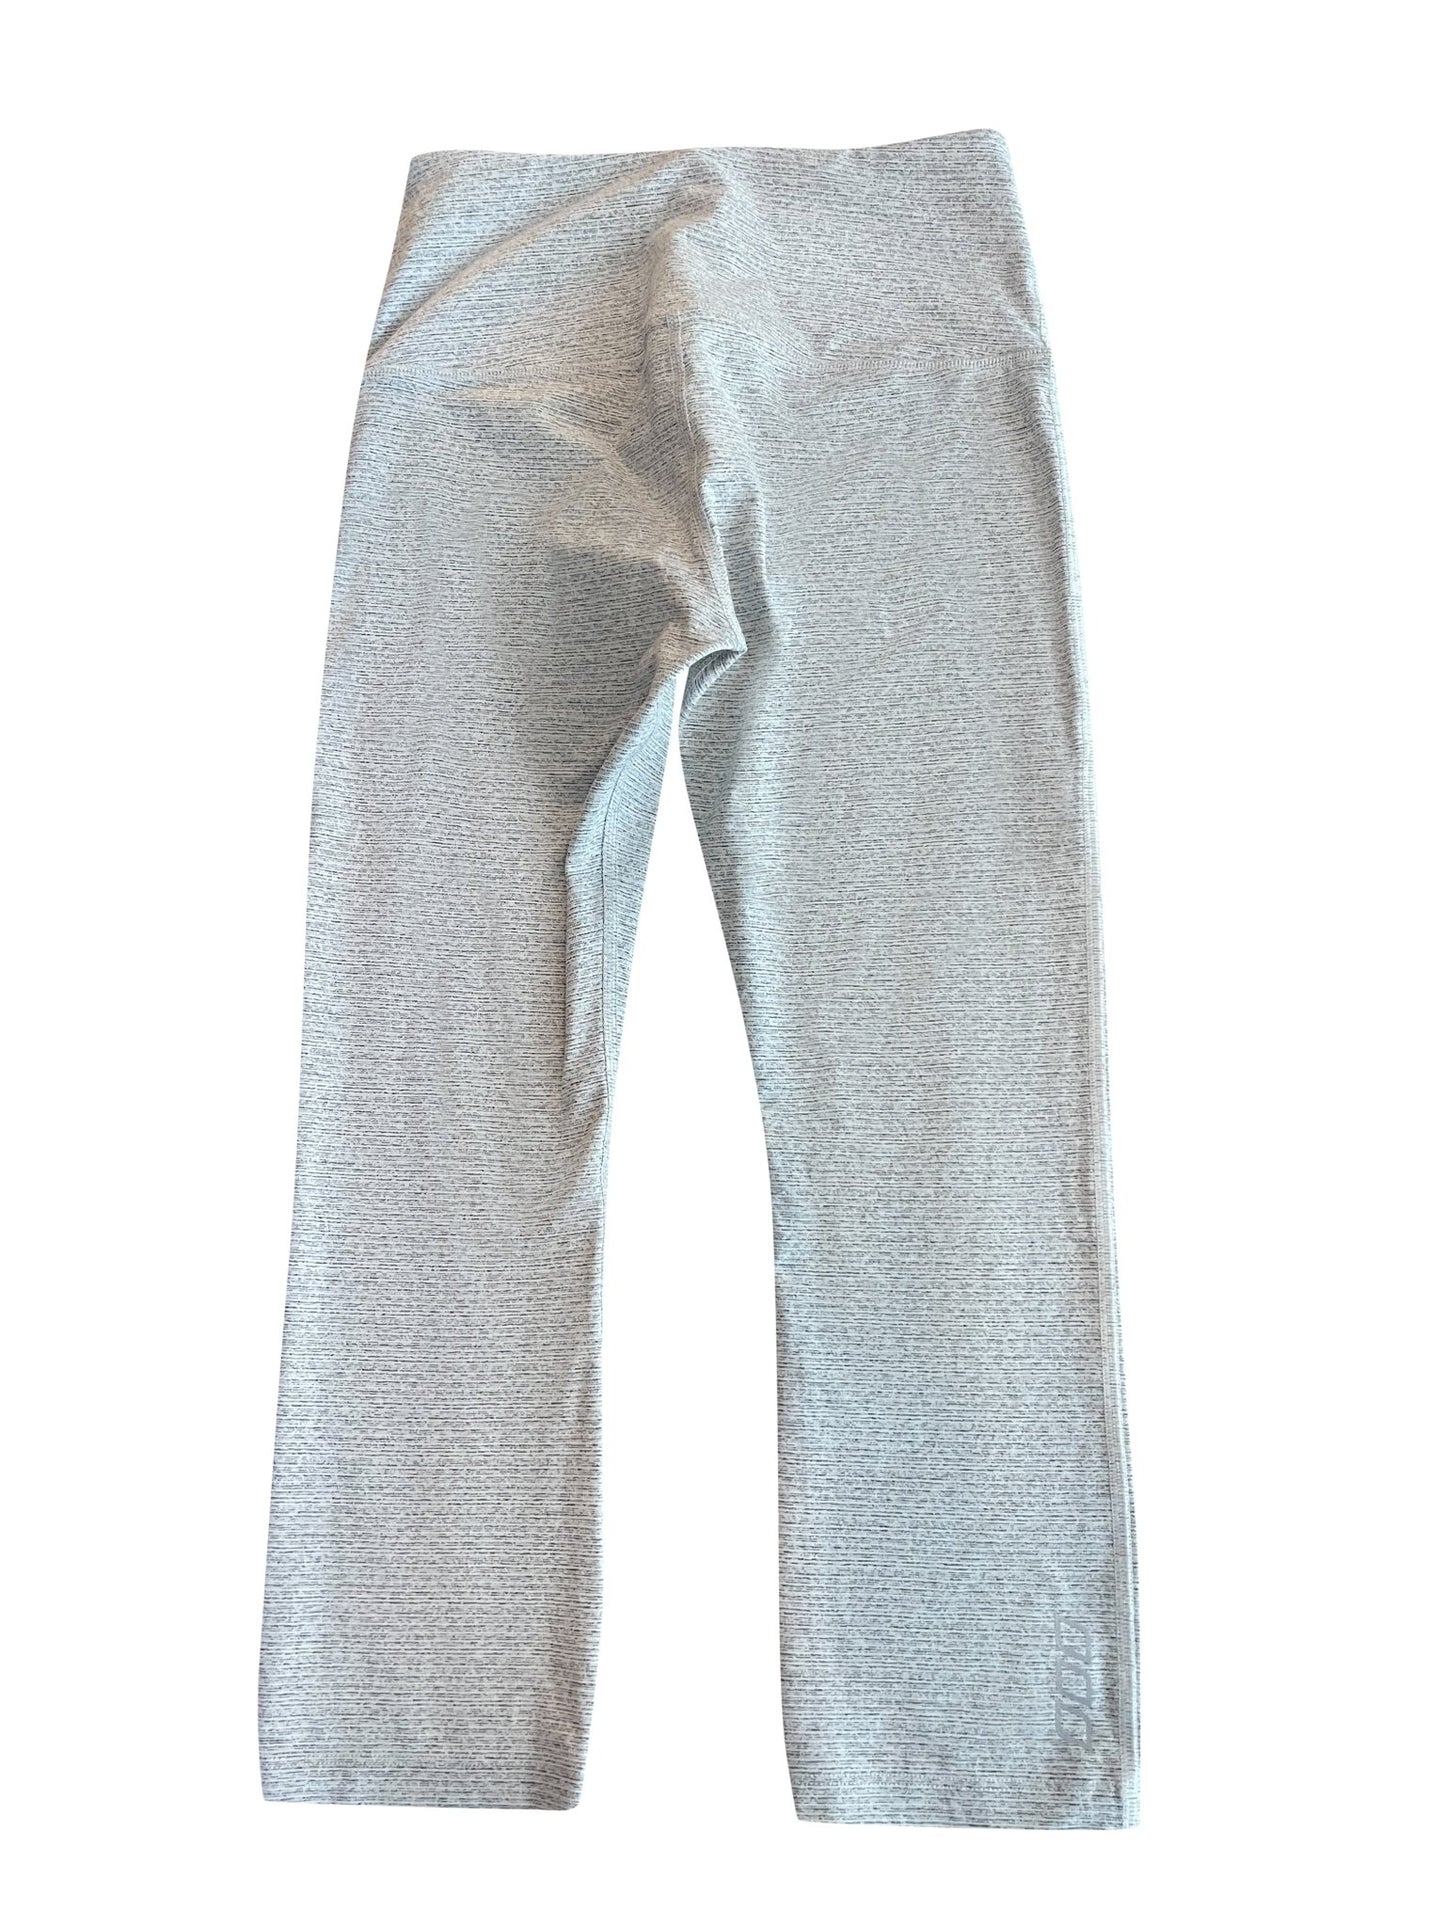 Lorna Jane grey 3/4 length leggings | size 8-10